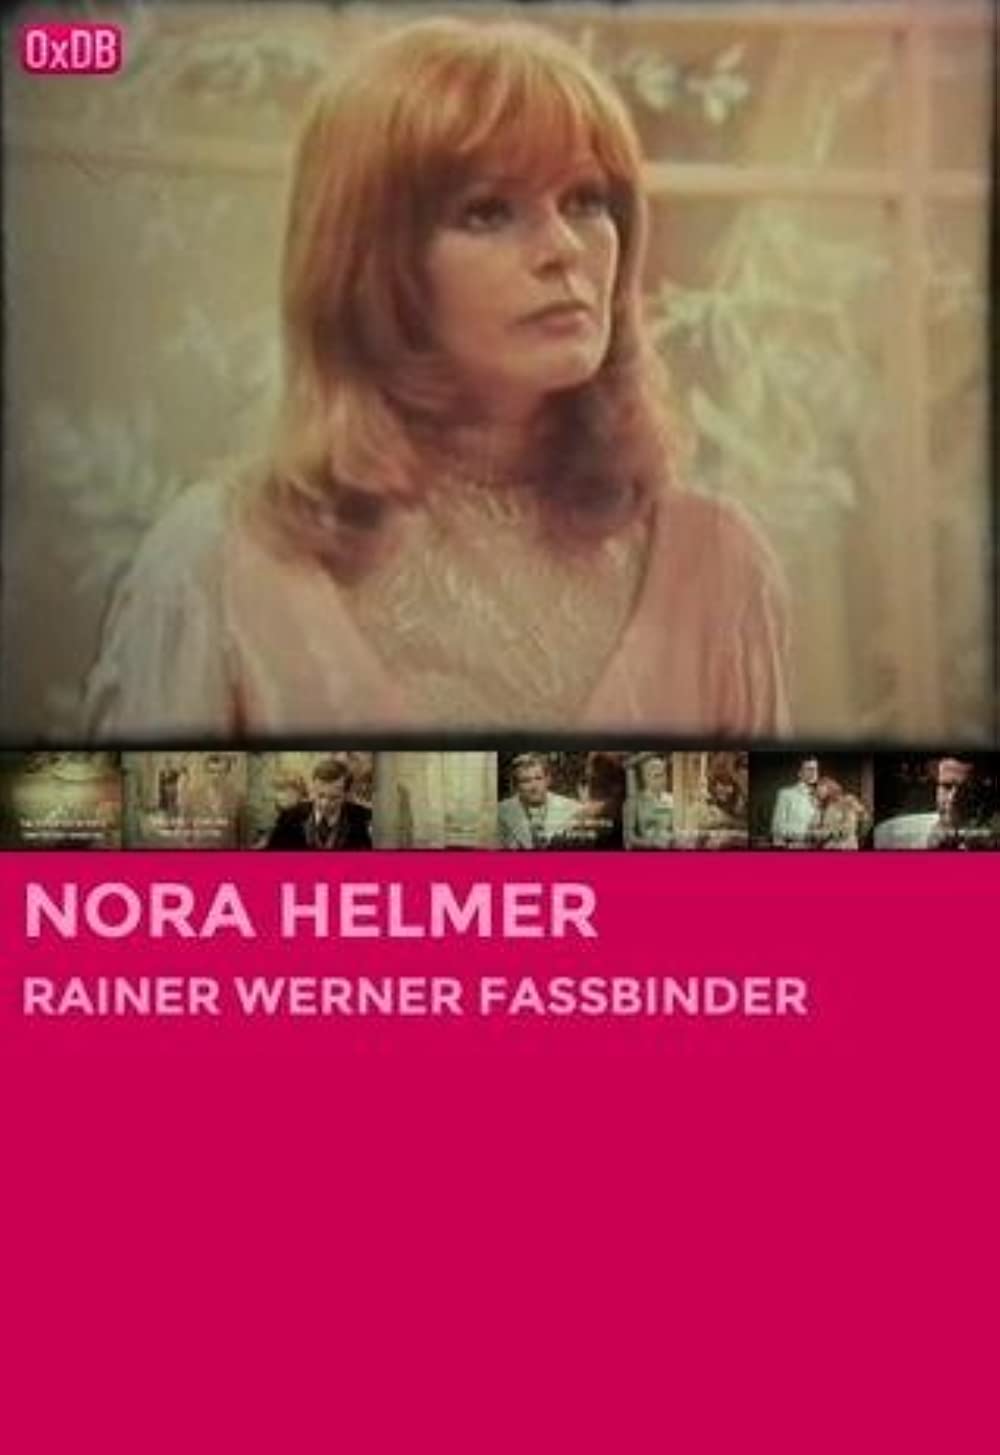 Filmbeschreibung zu Nora Helmer